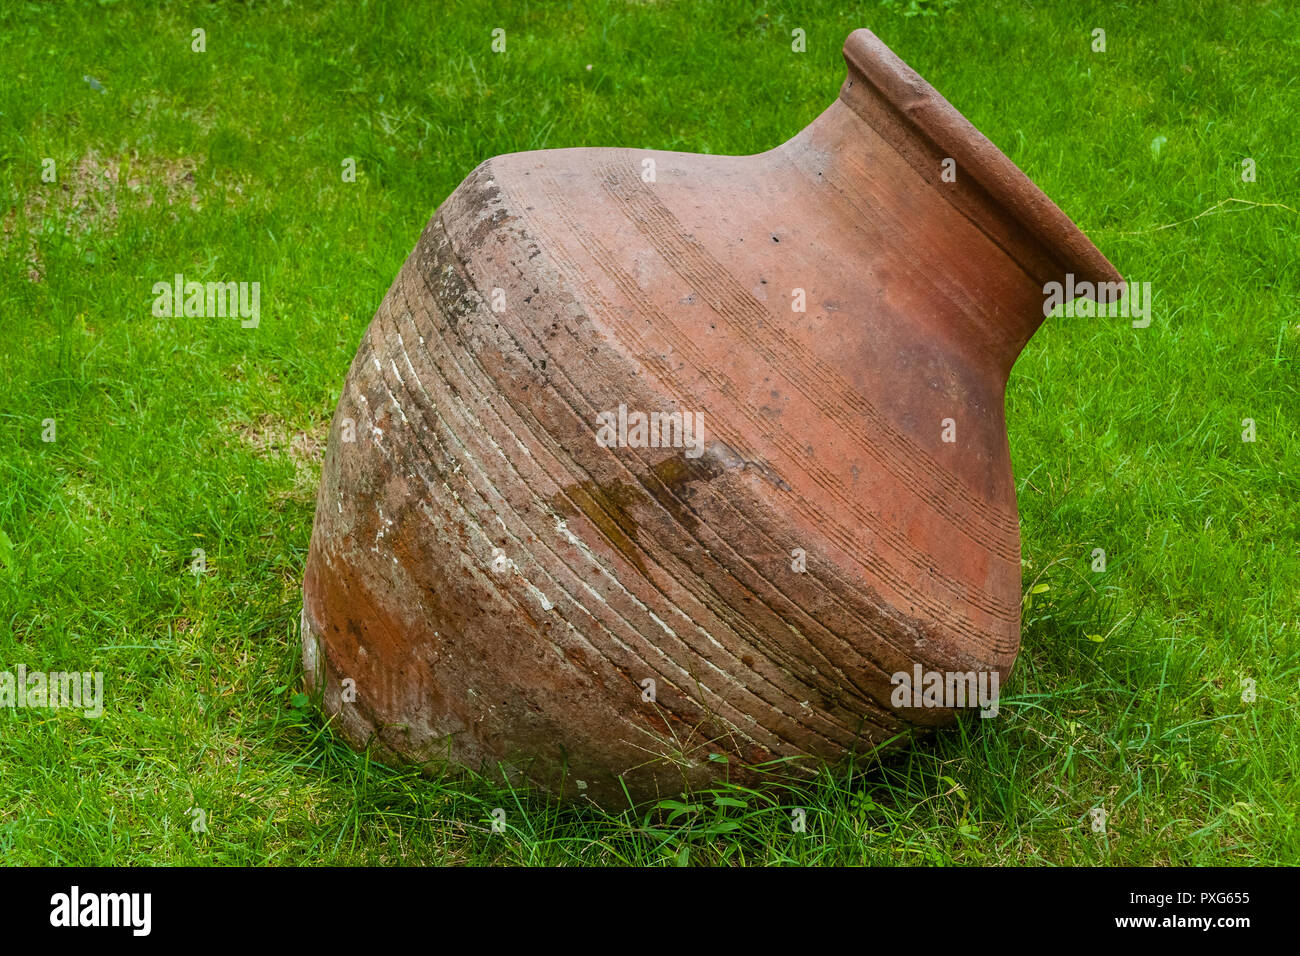 Alte terracotta Topf ruht auf etwas Gras. Stockfoto